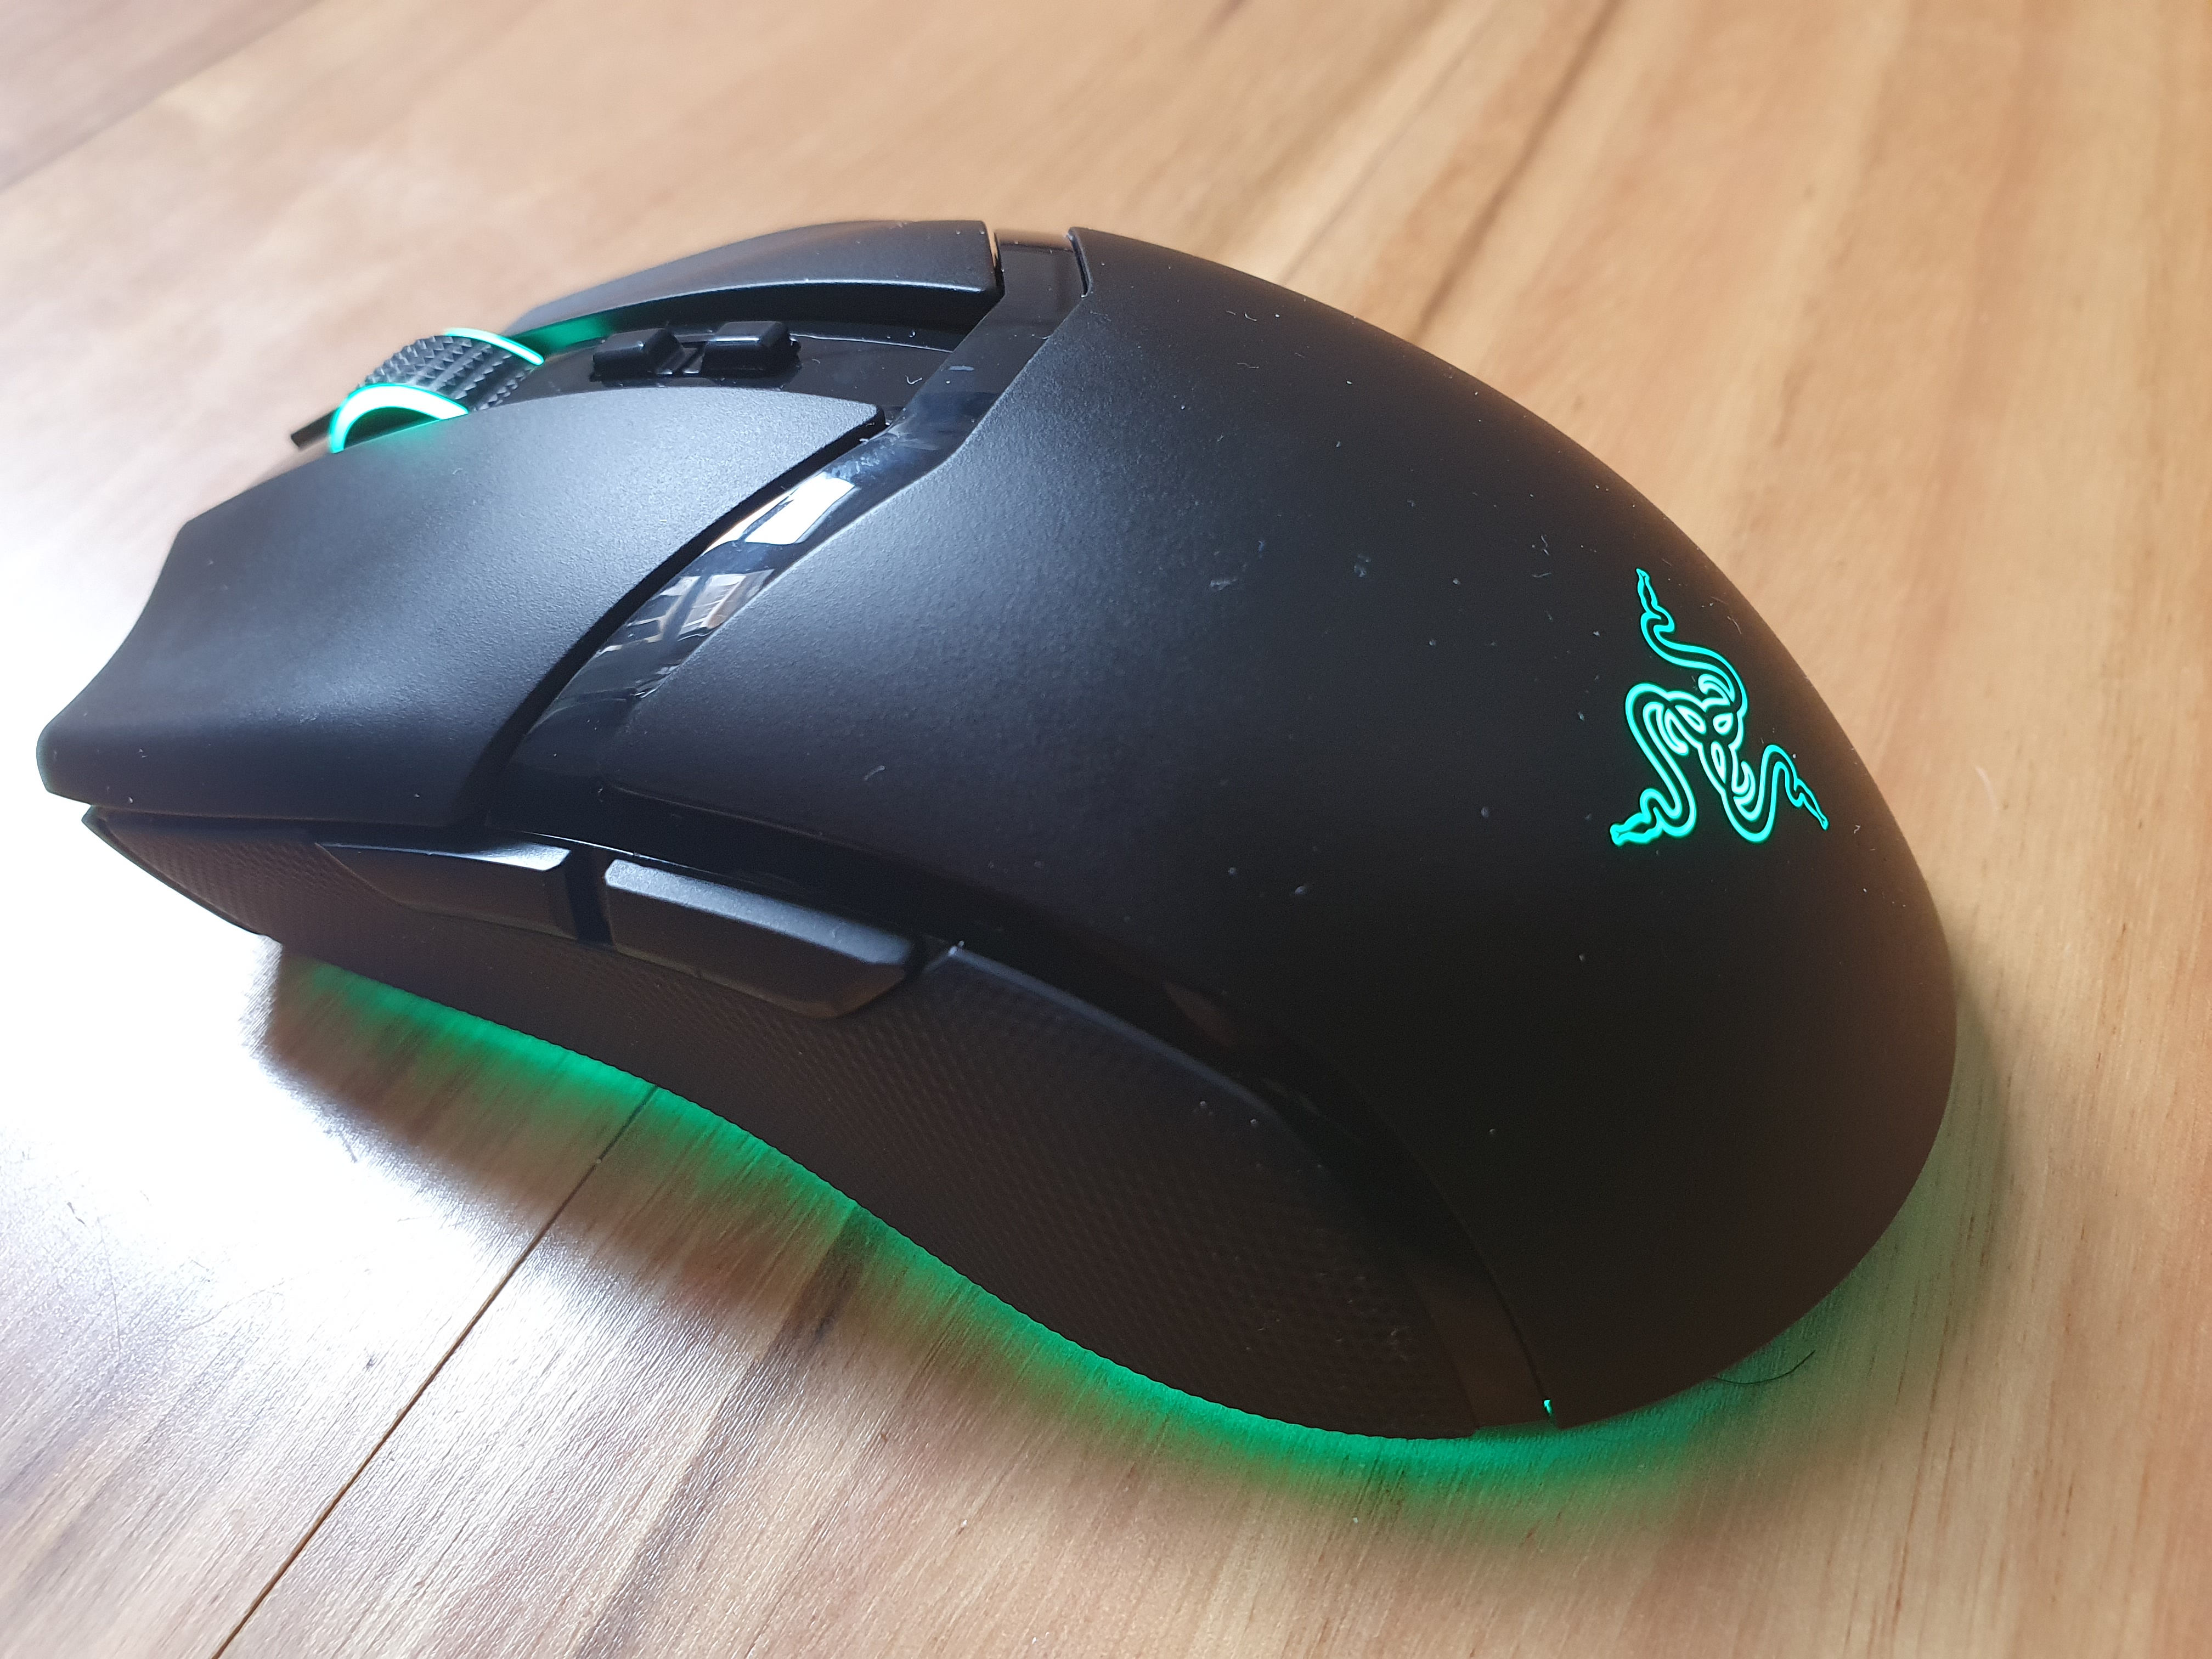 Razer Cobra Pro - Handiest wireless gaming mouse 